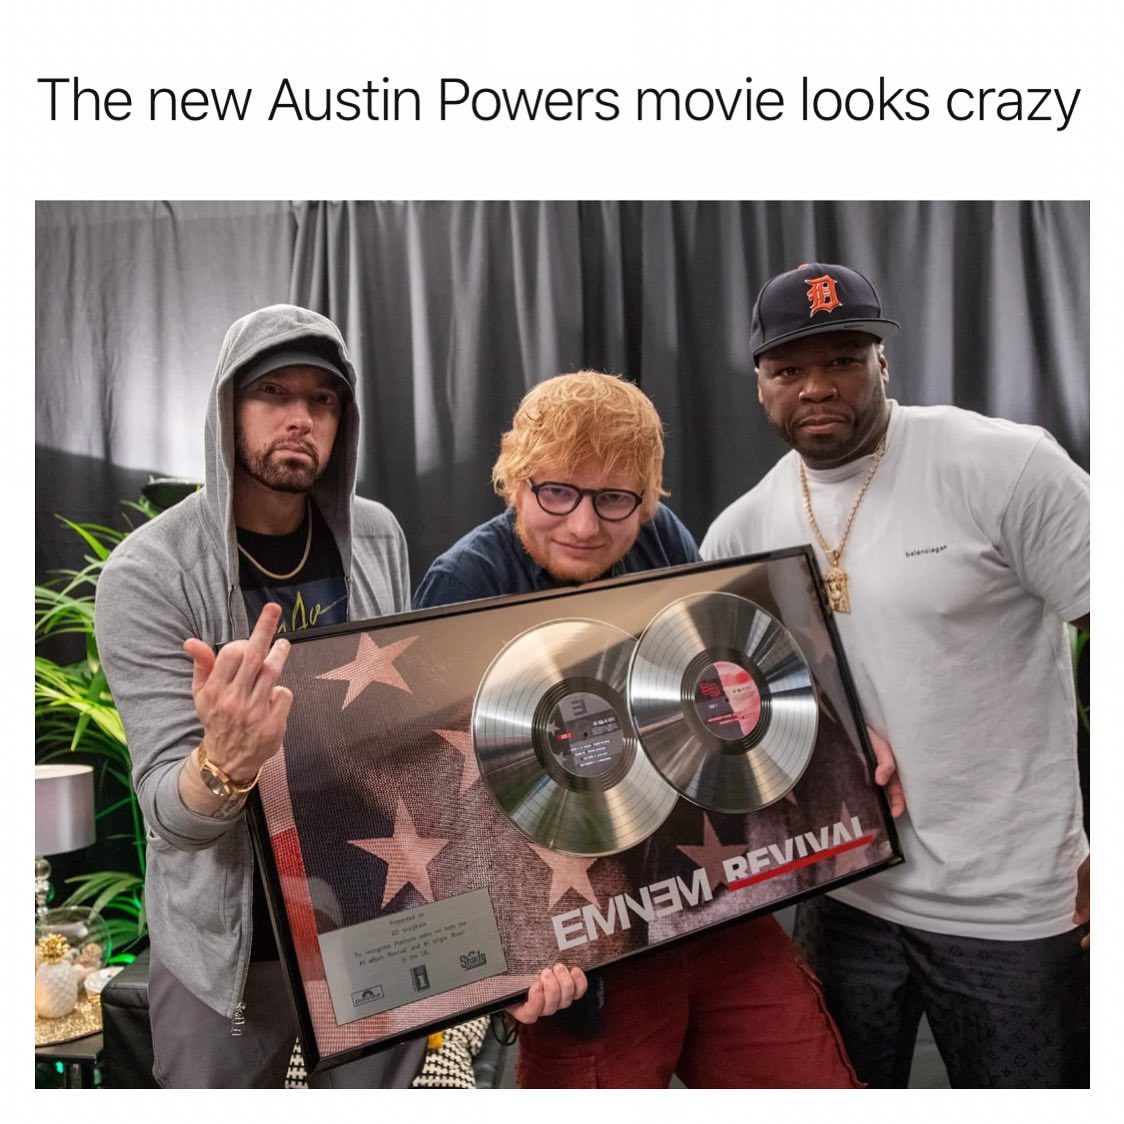 The new Austin Powers movie looks crazy.